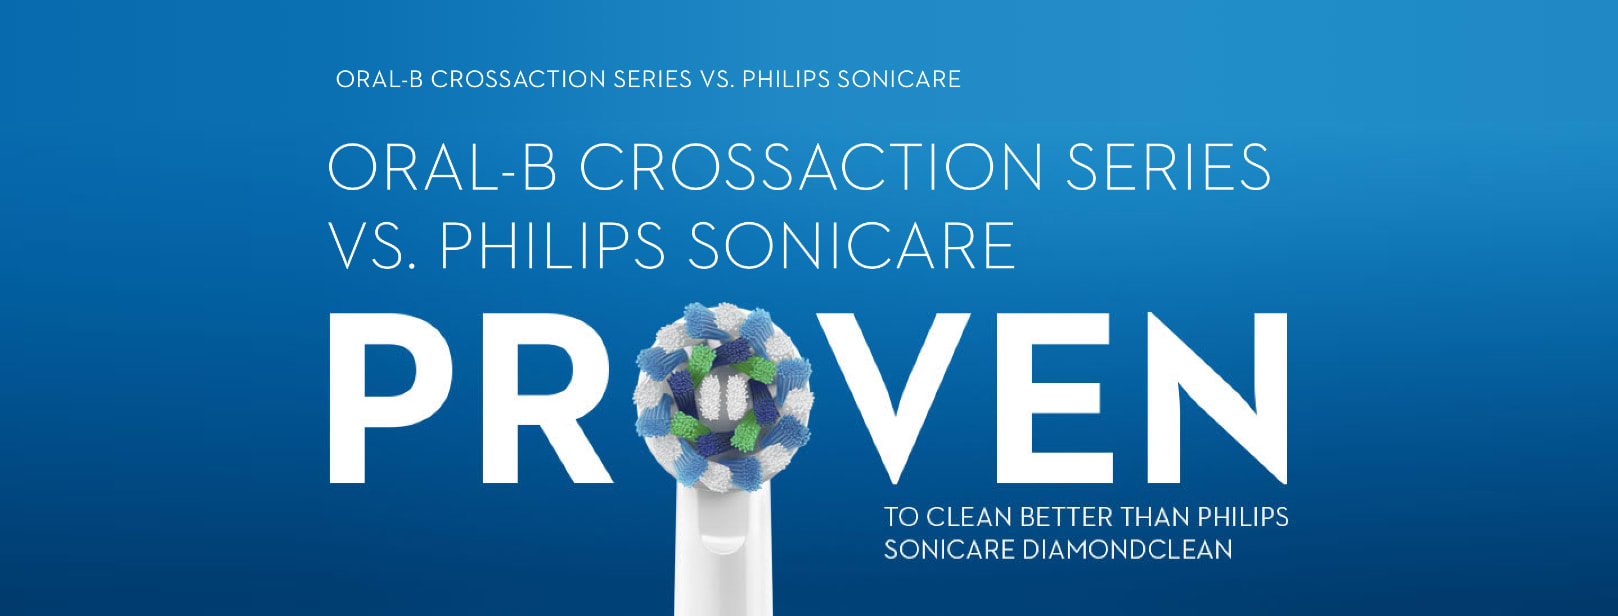 oral-b crossaction series vs phillips sonicare